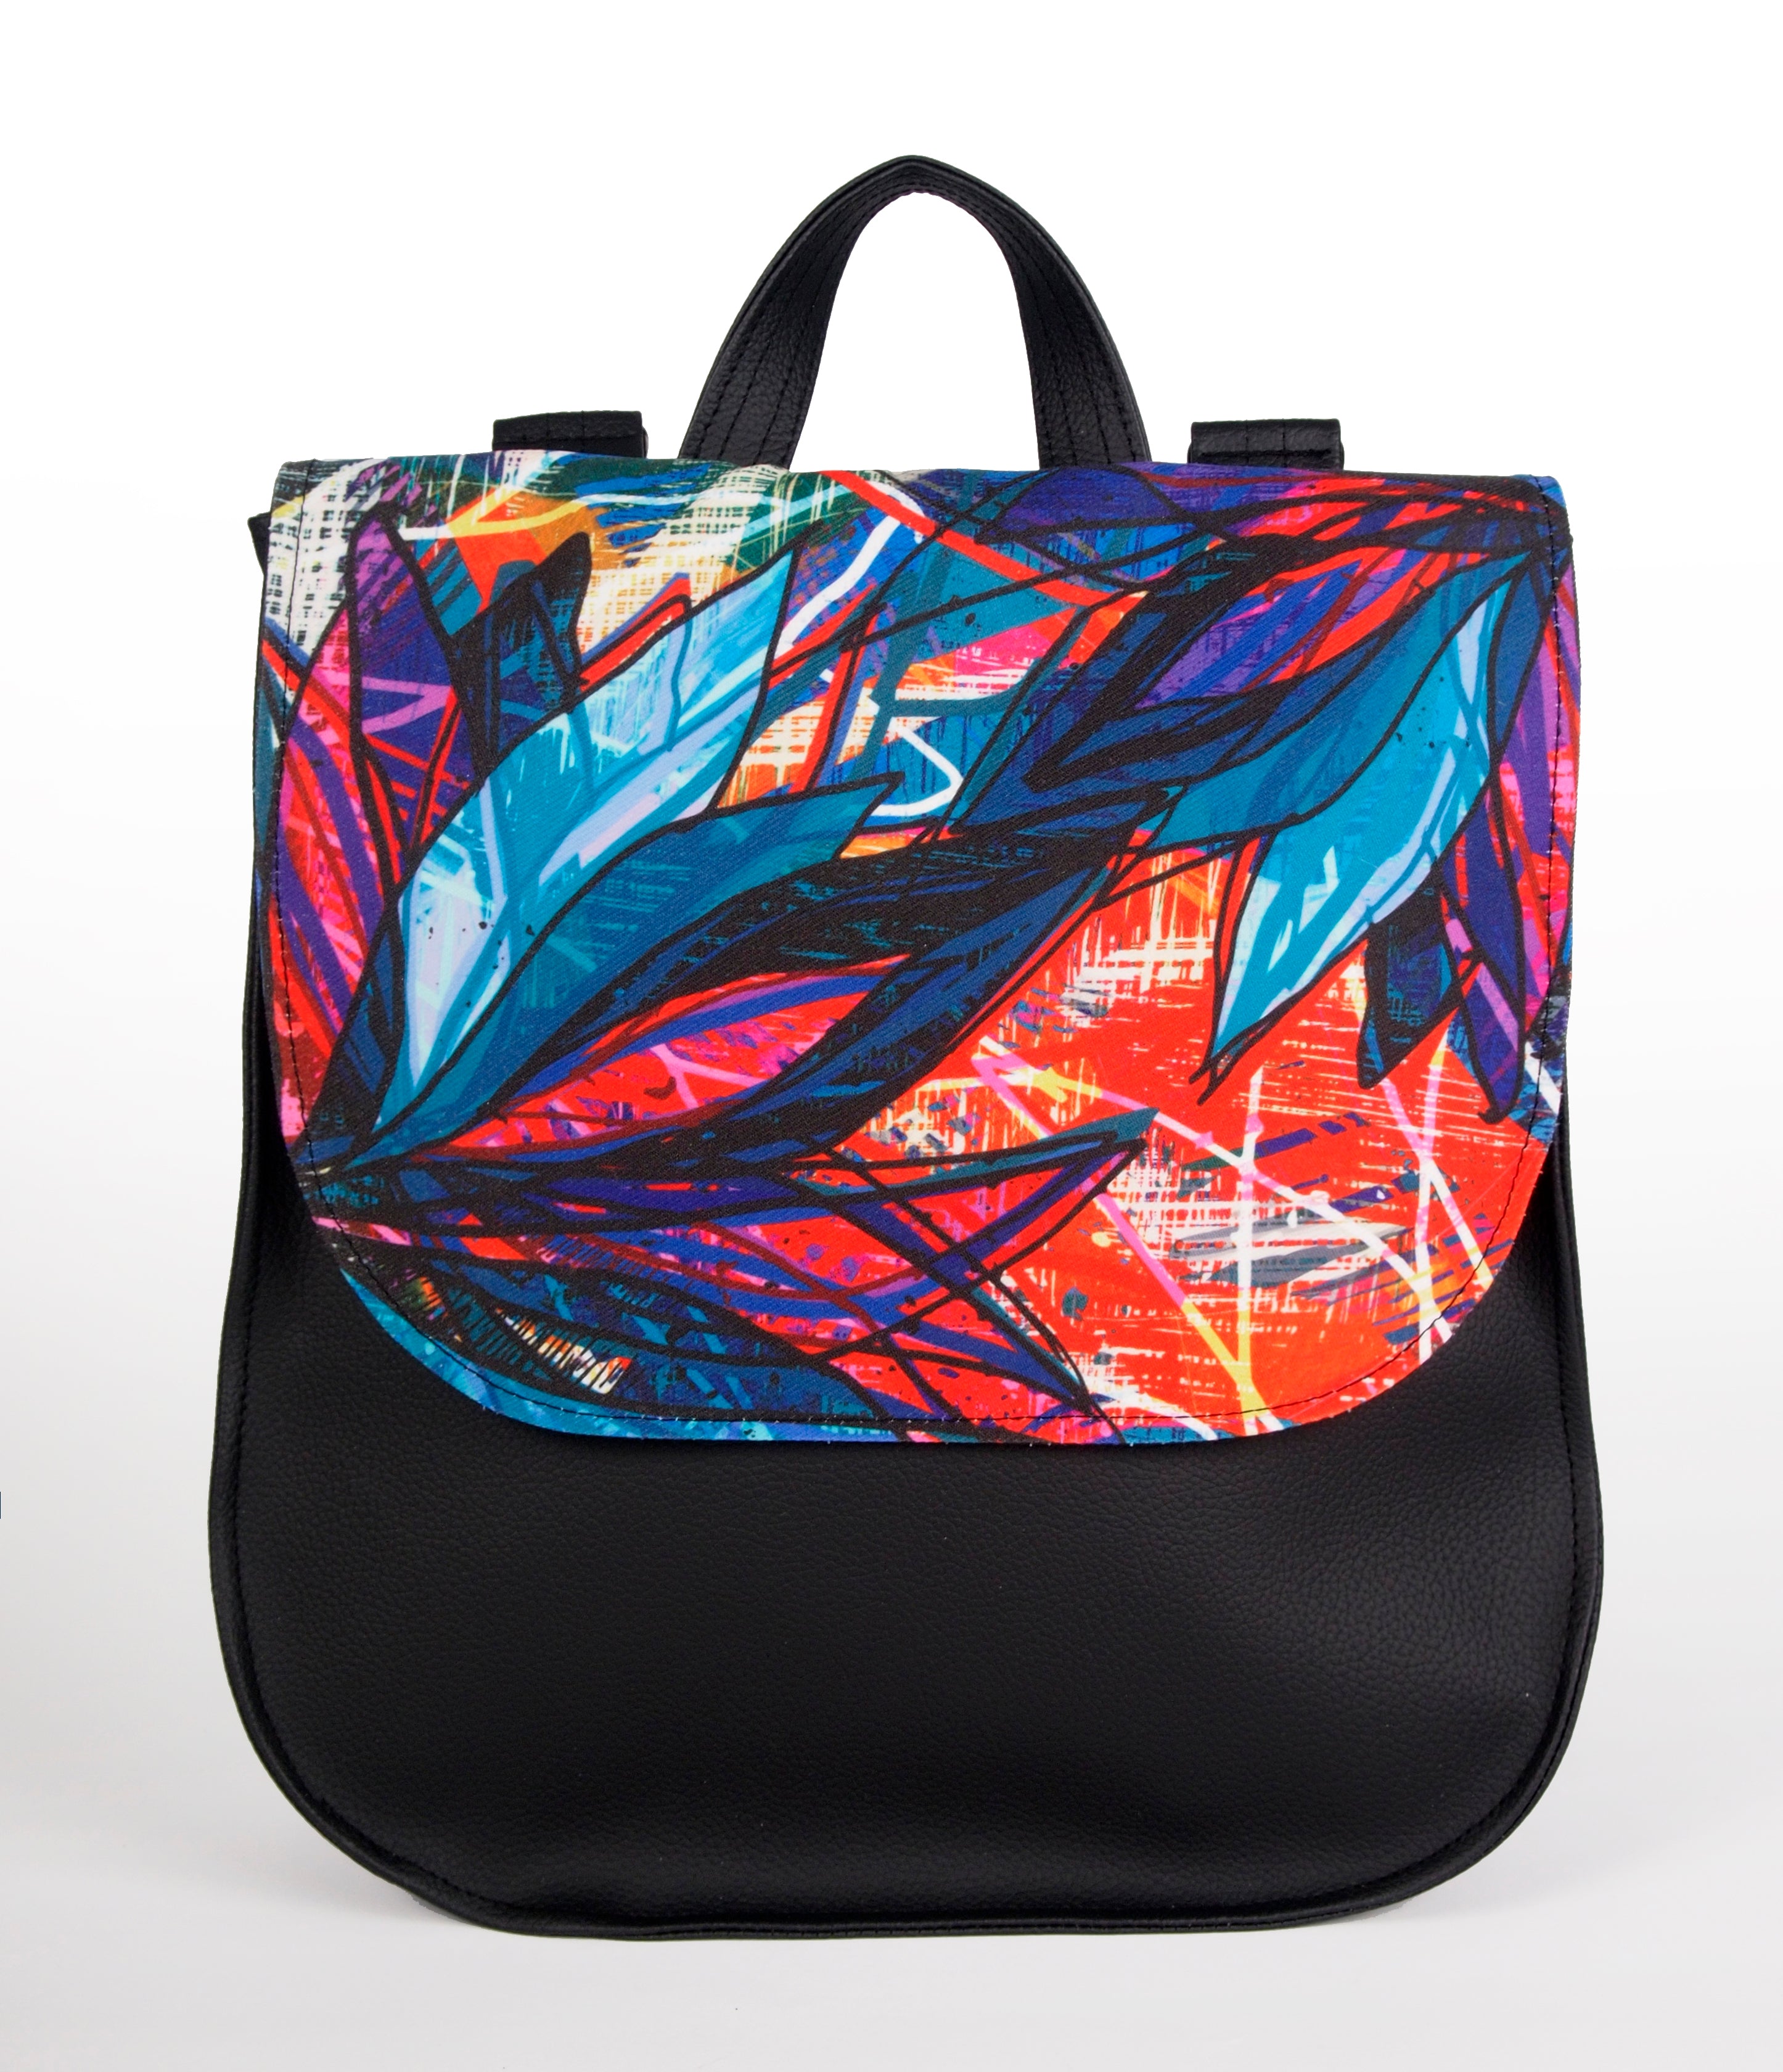 Bardo backpack&bag - Blue Water Lily - Premium bardo backpack&bag from BARDO ART WORKS - Just lvart bag, backpack, bag, black, floral, flowers, gift, green, handemade, messenger, nature, red, urban style, vegan leather, woman85.00! Shop now at BARDO ART WORKS